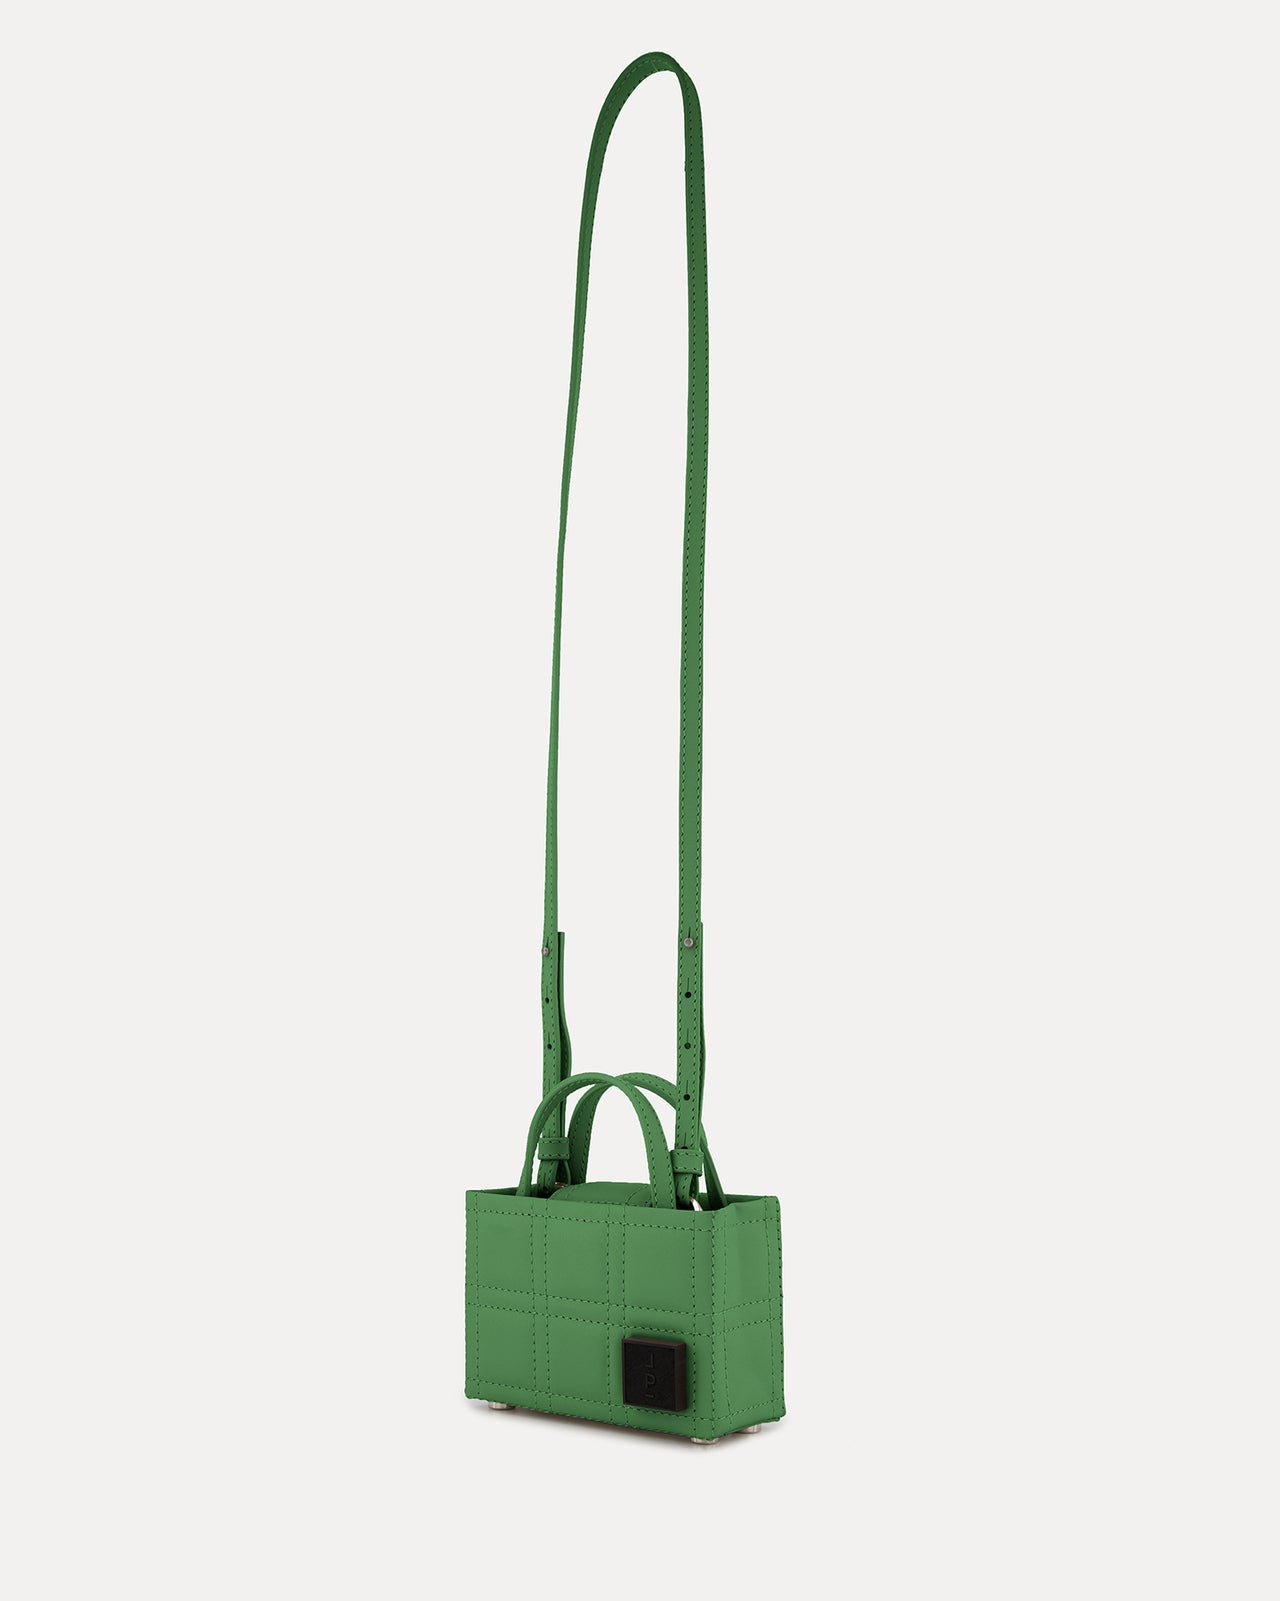 3x2 Bag in Green